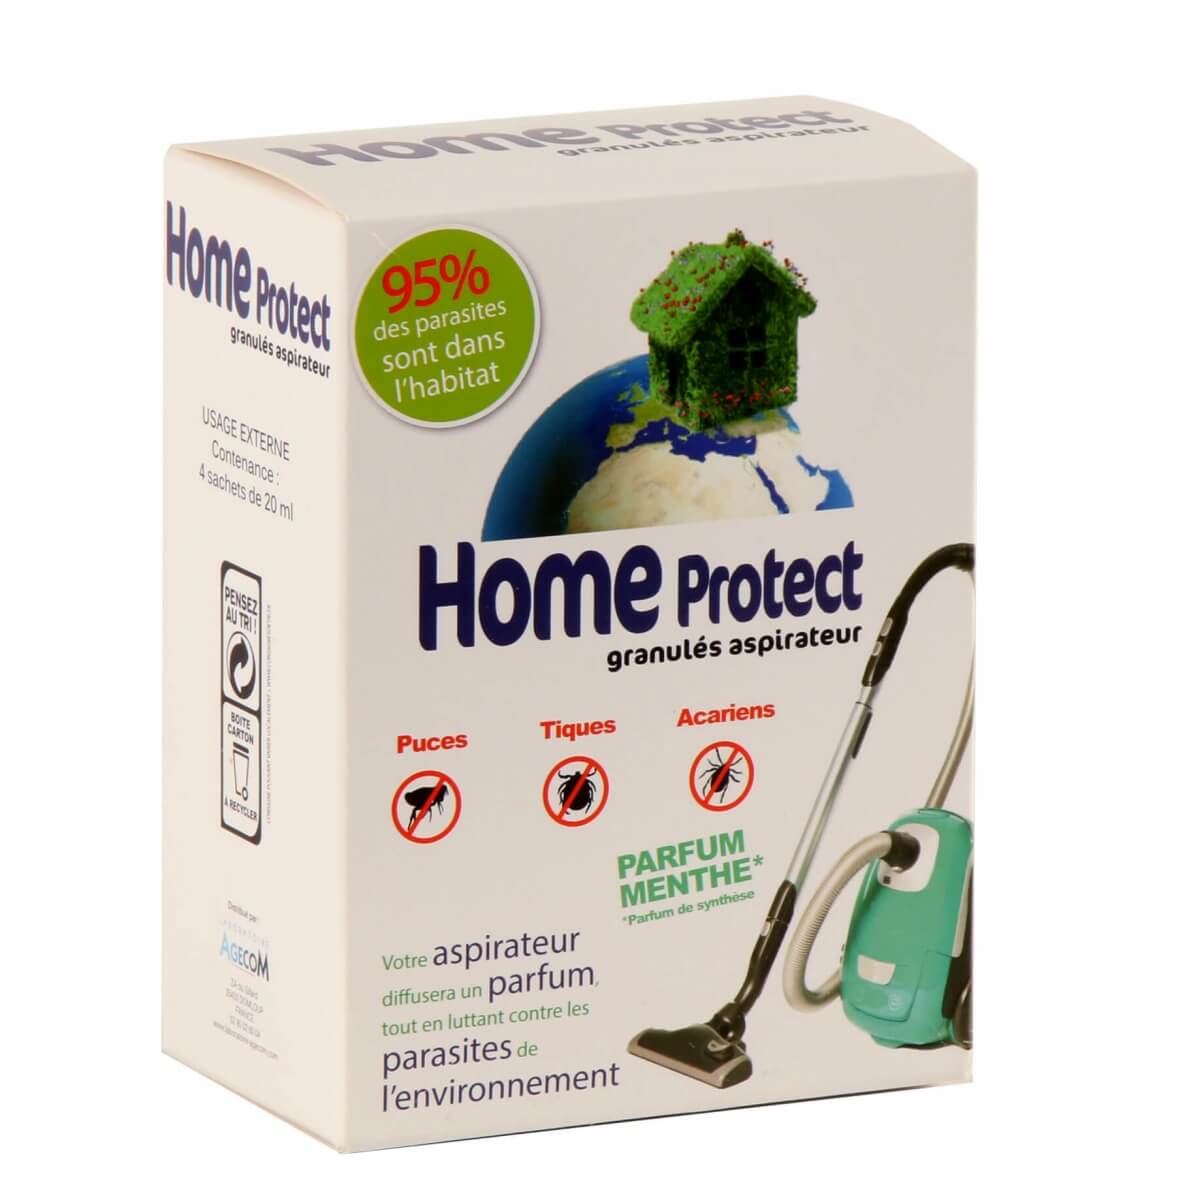 Home Protect stofzuiger geurkorrels met munt